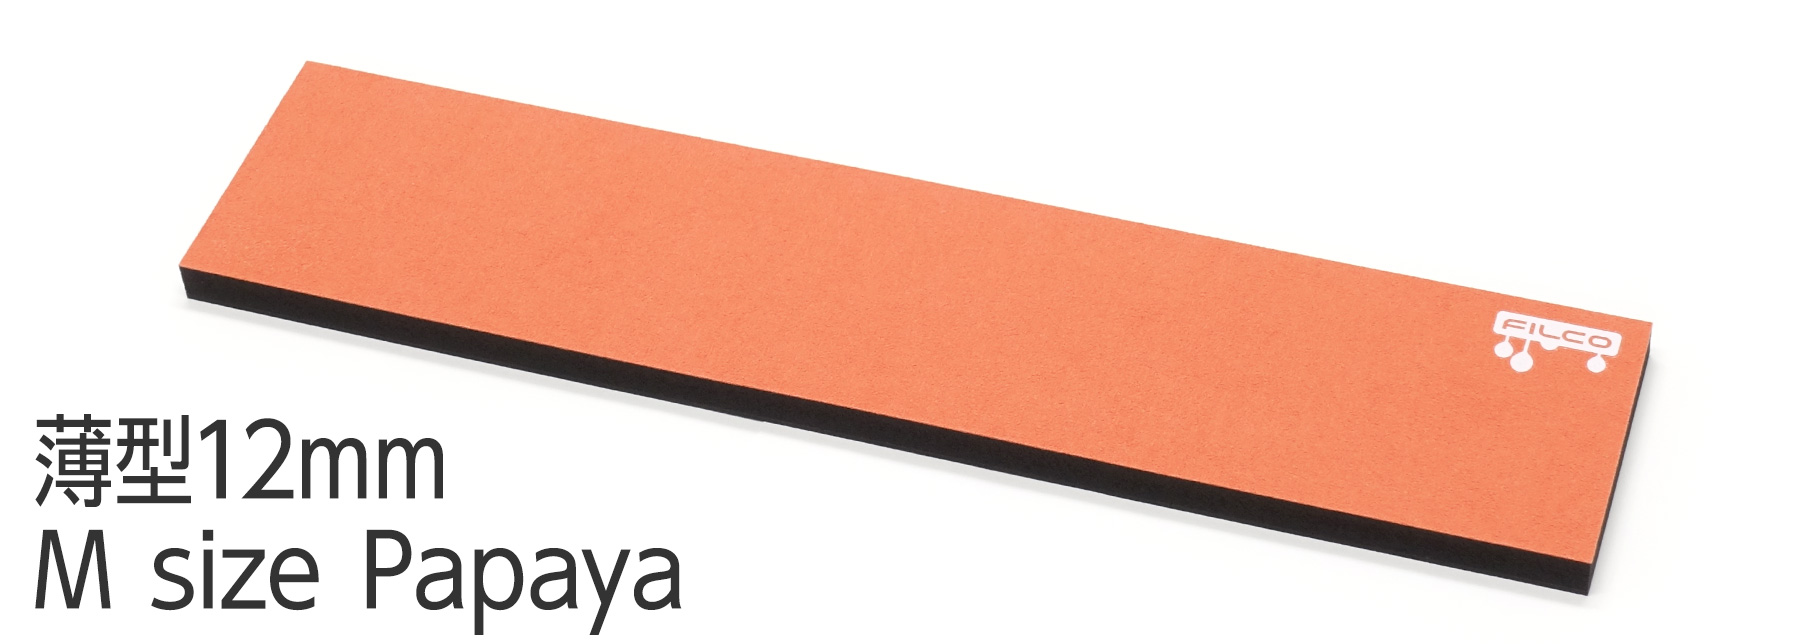 FILCO Majestouch Wrist Rest "Macaron" 薄型12mm・Mサイズ・Papaya